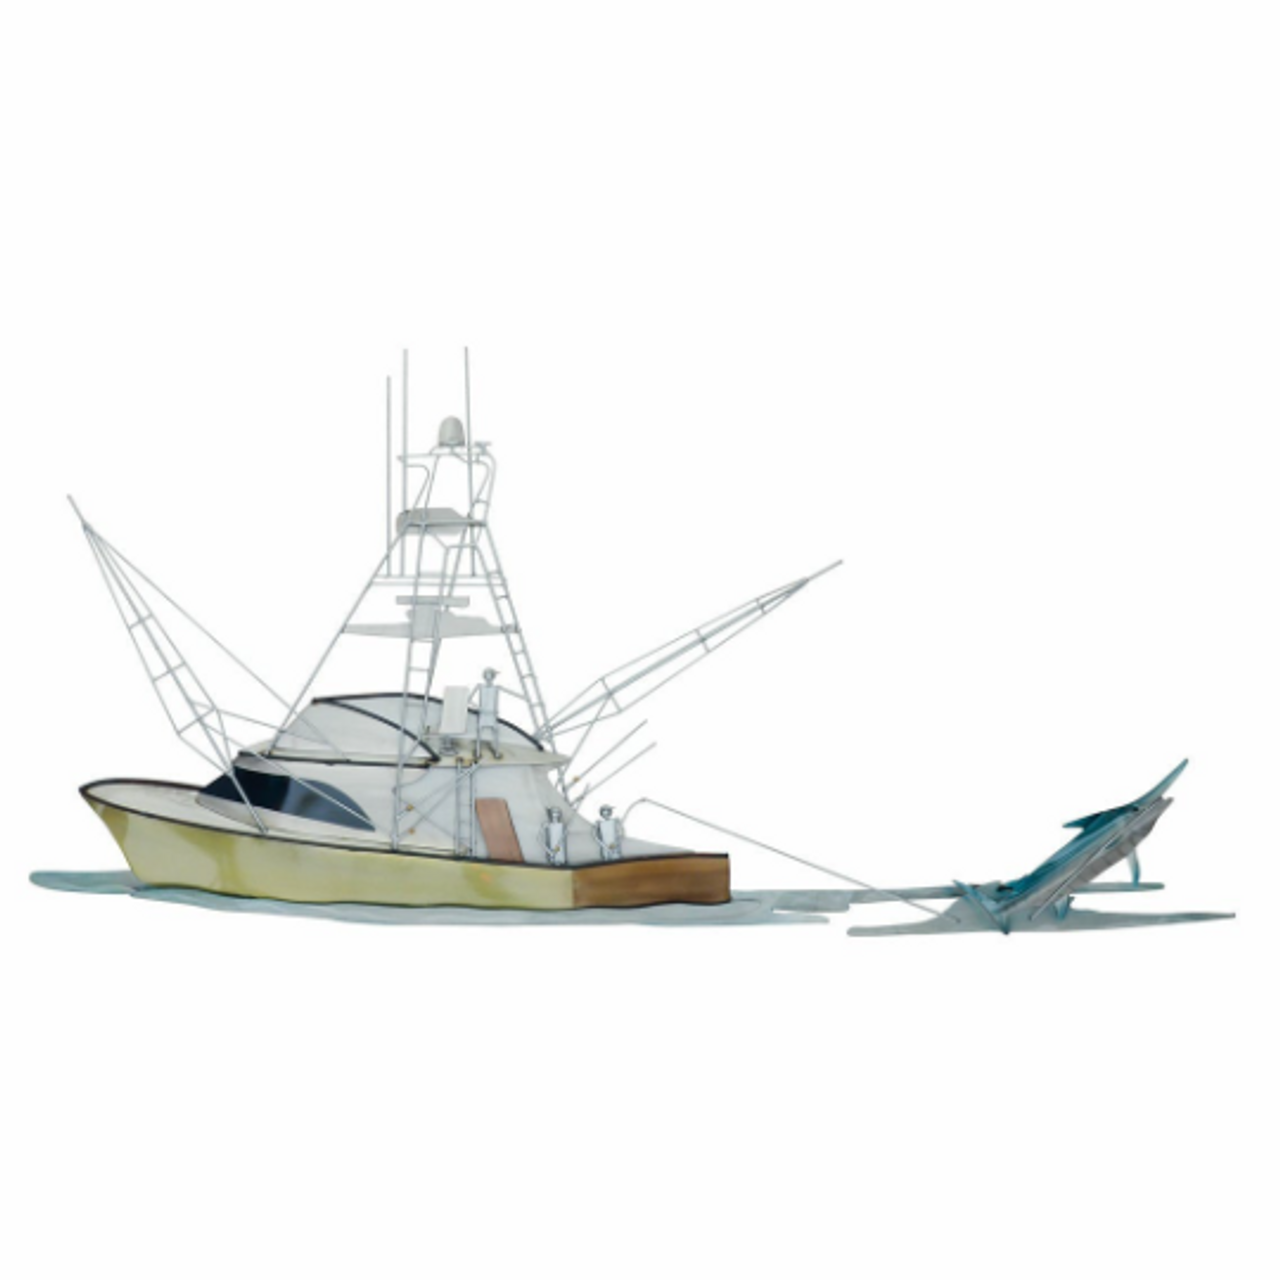 Hooked Up!  Fishing Boat with Marlin Coastal Metal Wall Sculpture